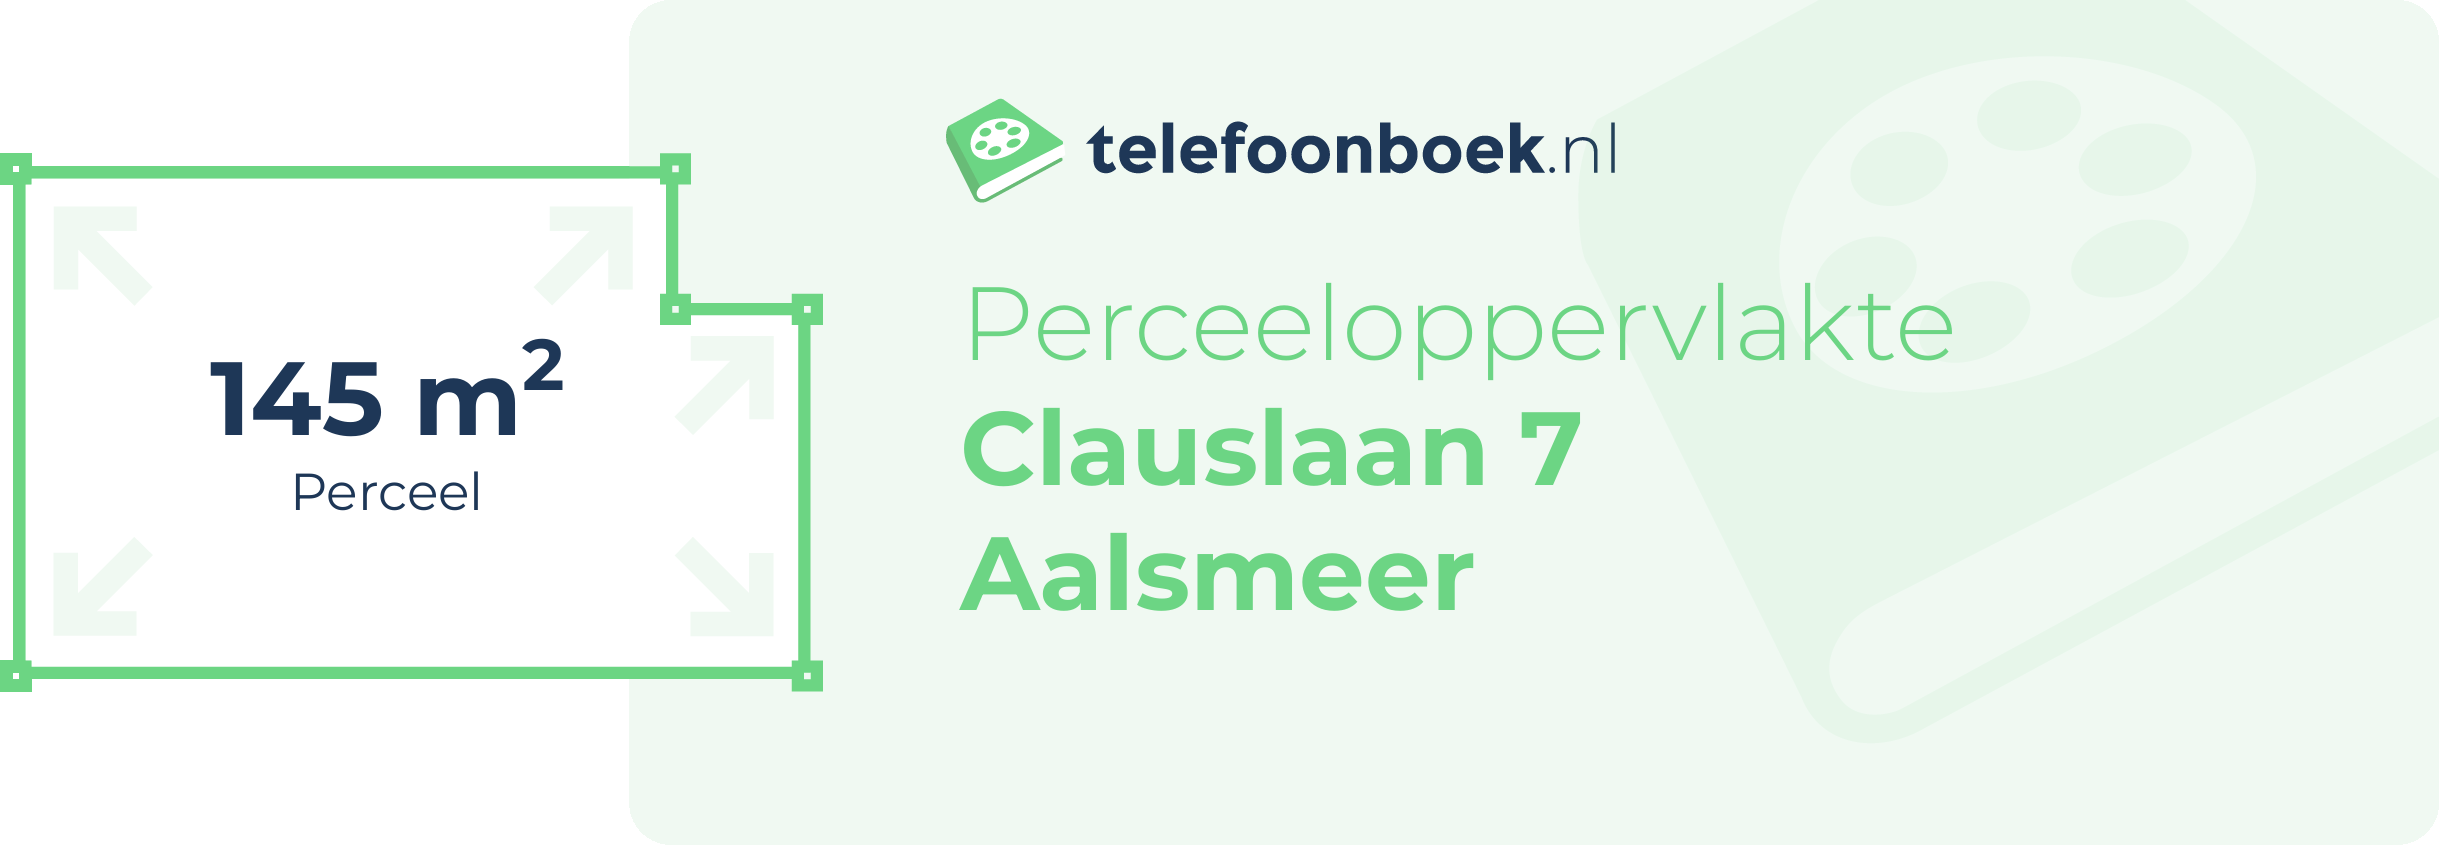 Perceeloppervlakte Clauslaan 7 Aalsmeer